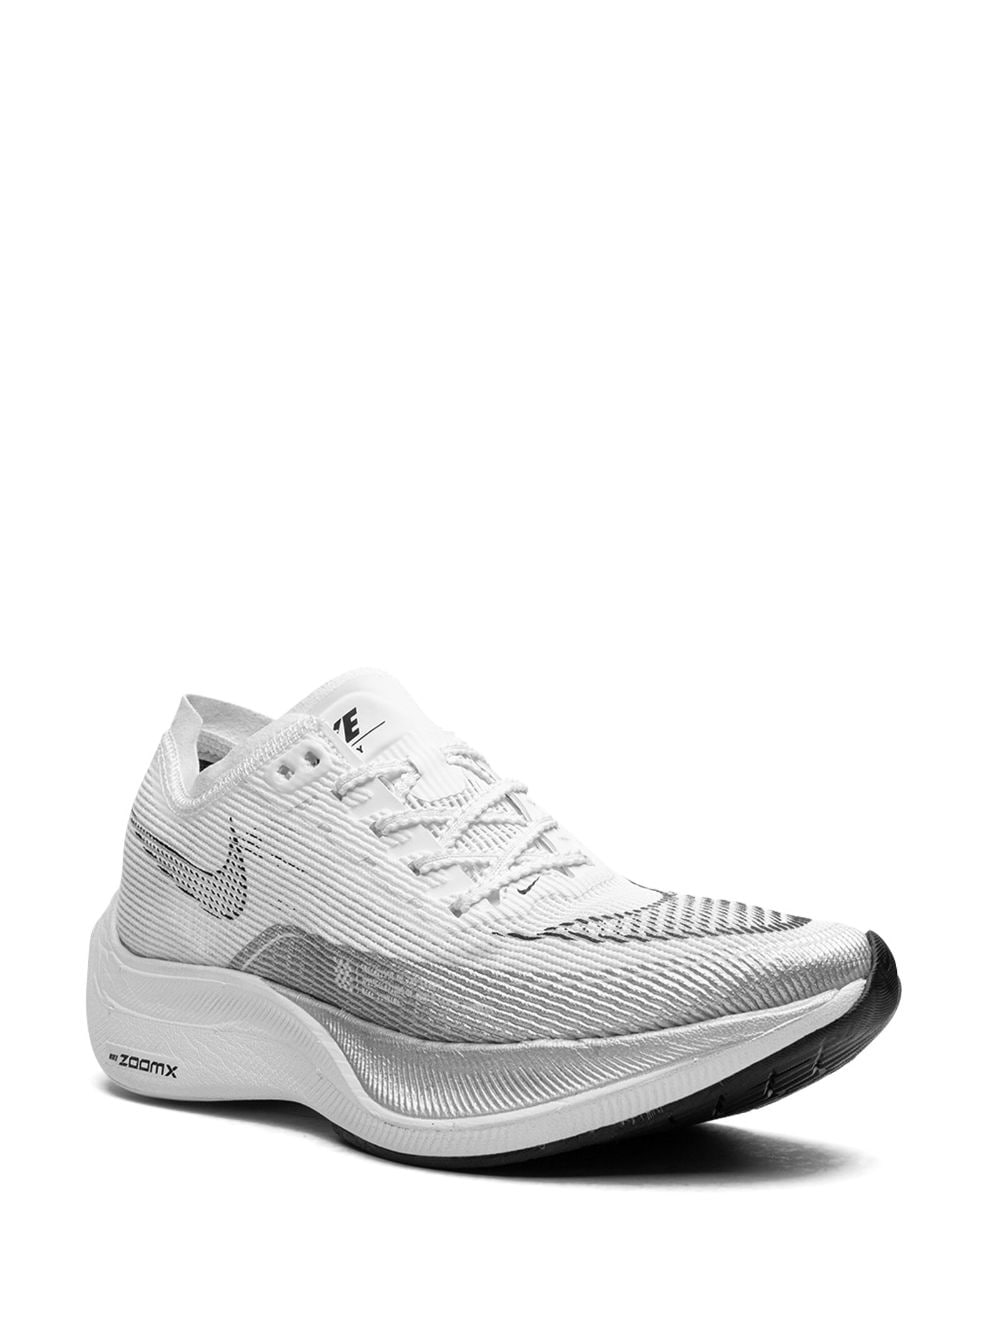 Image 2 of Nike ZoomX Vaporfly Next 2 "White Metallic Silver" sneakers